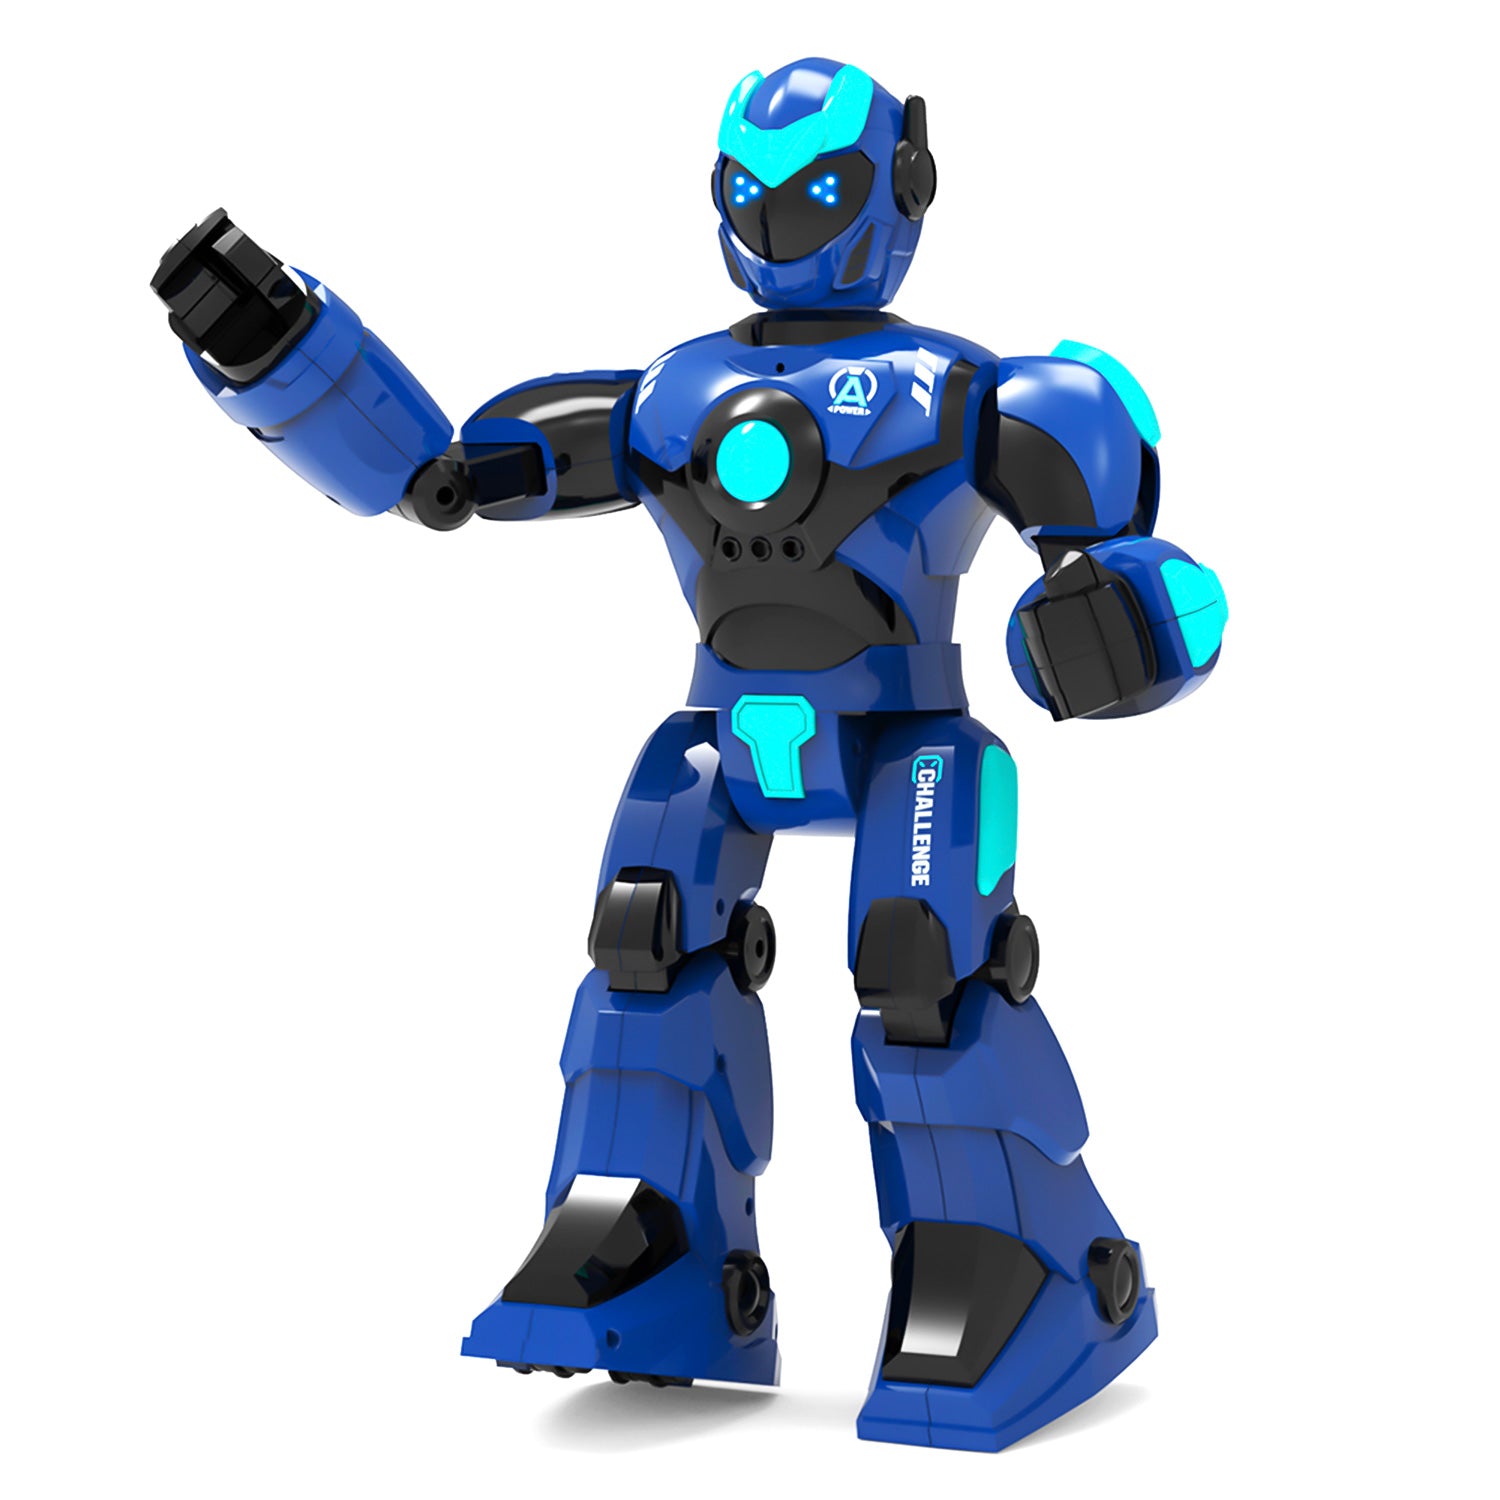 STEMTRON Robot de control remoto inteligente controlado por voz inteligente para niños (Azul)